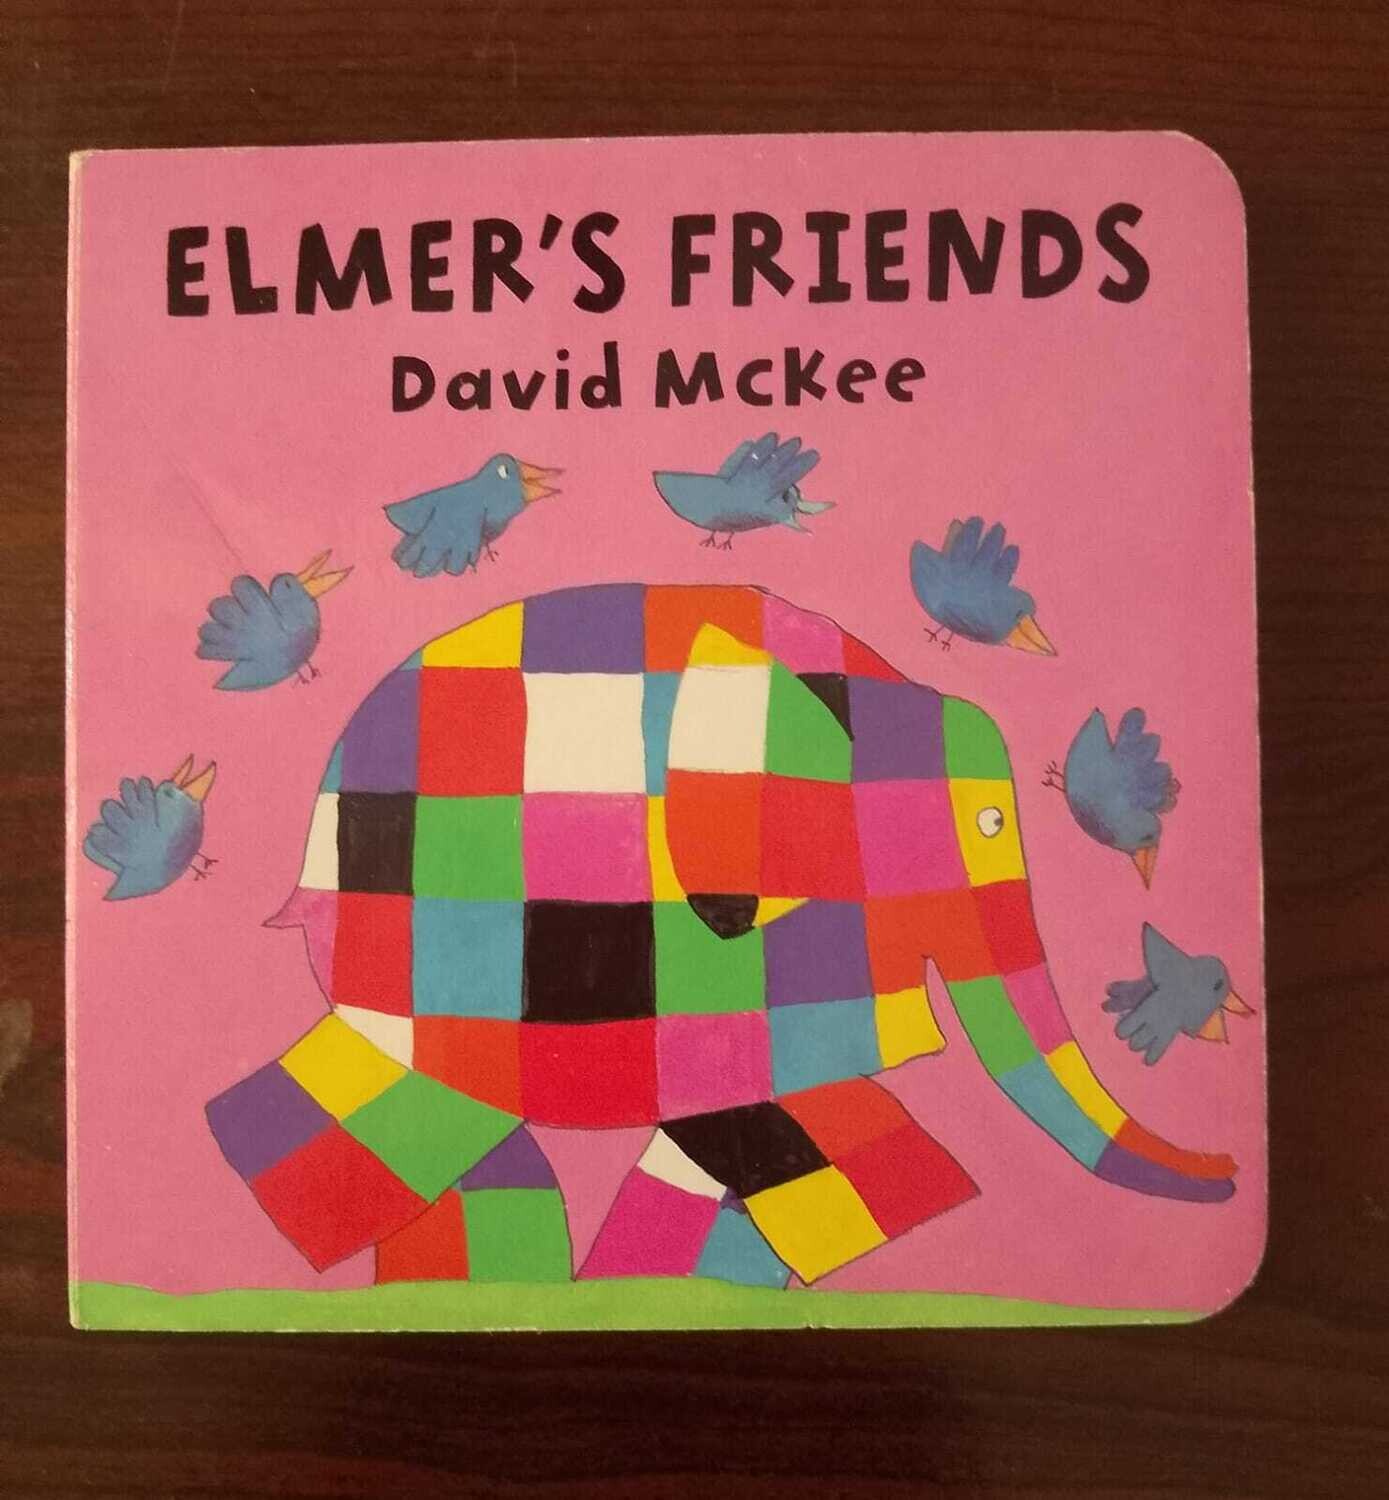 Elmer's friends david mckee